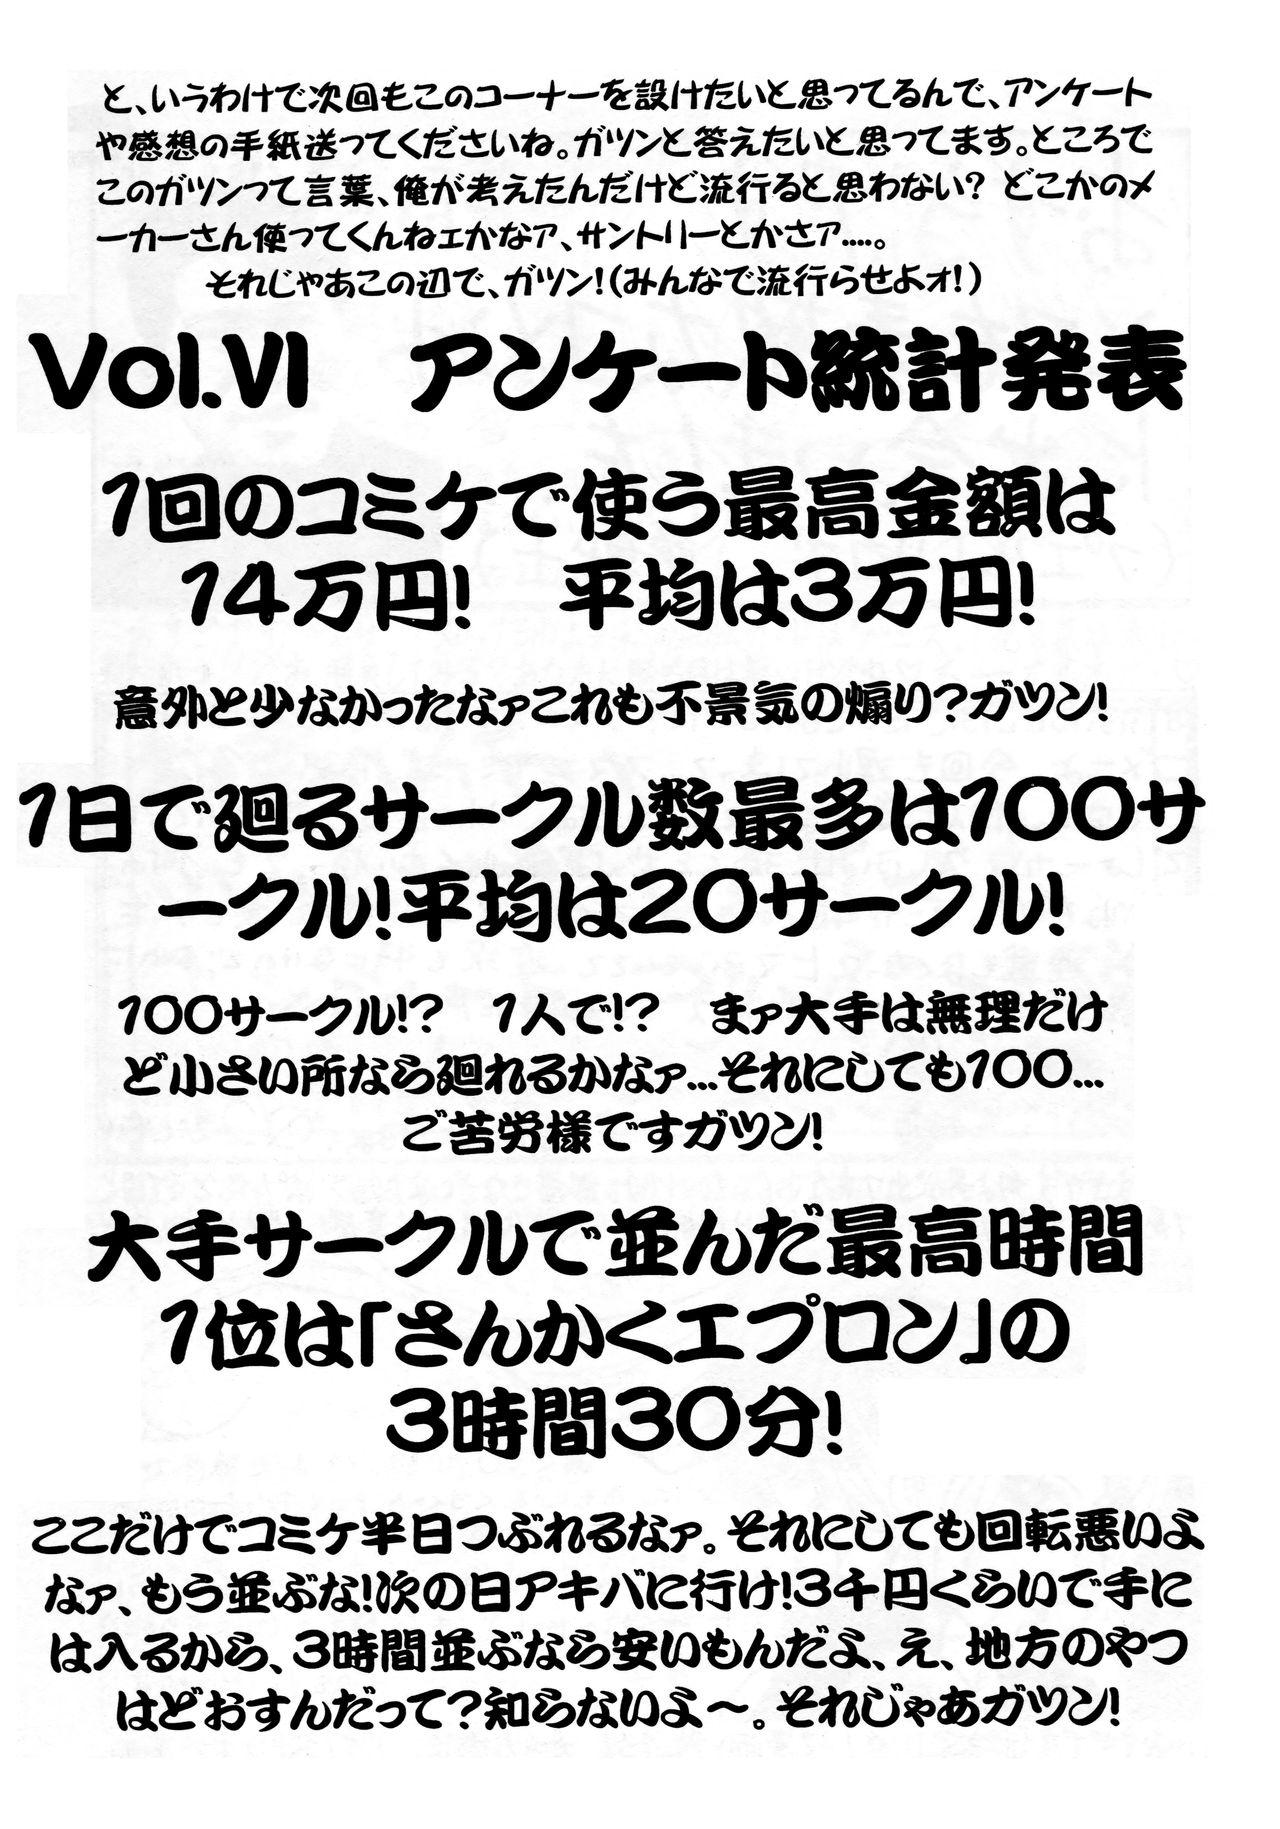 G-SHOCK Vol. 7 59